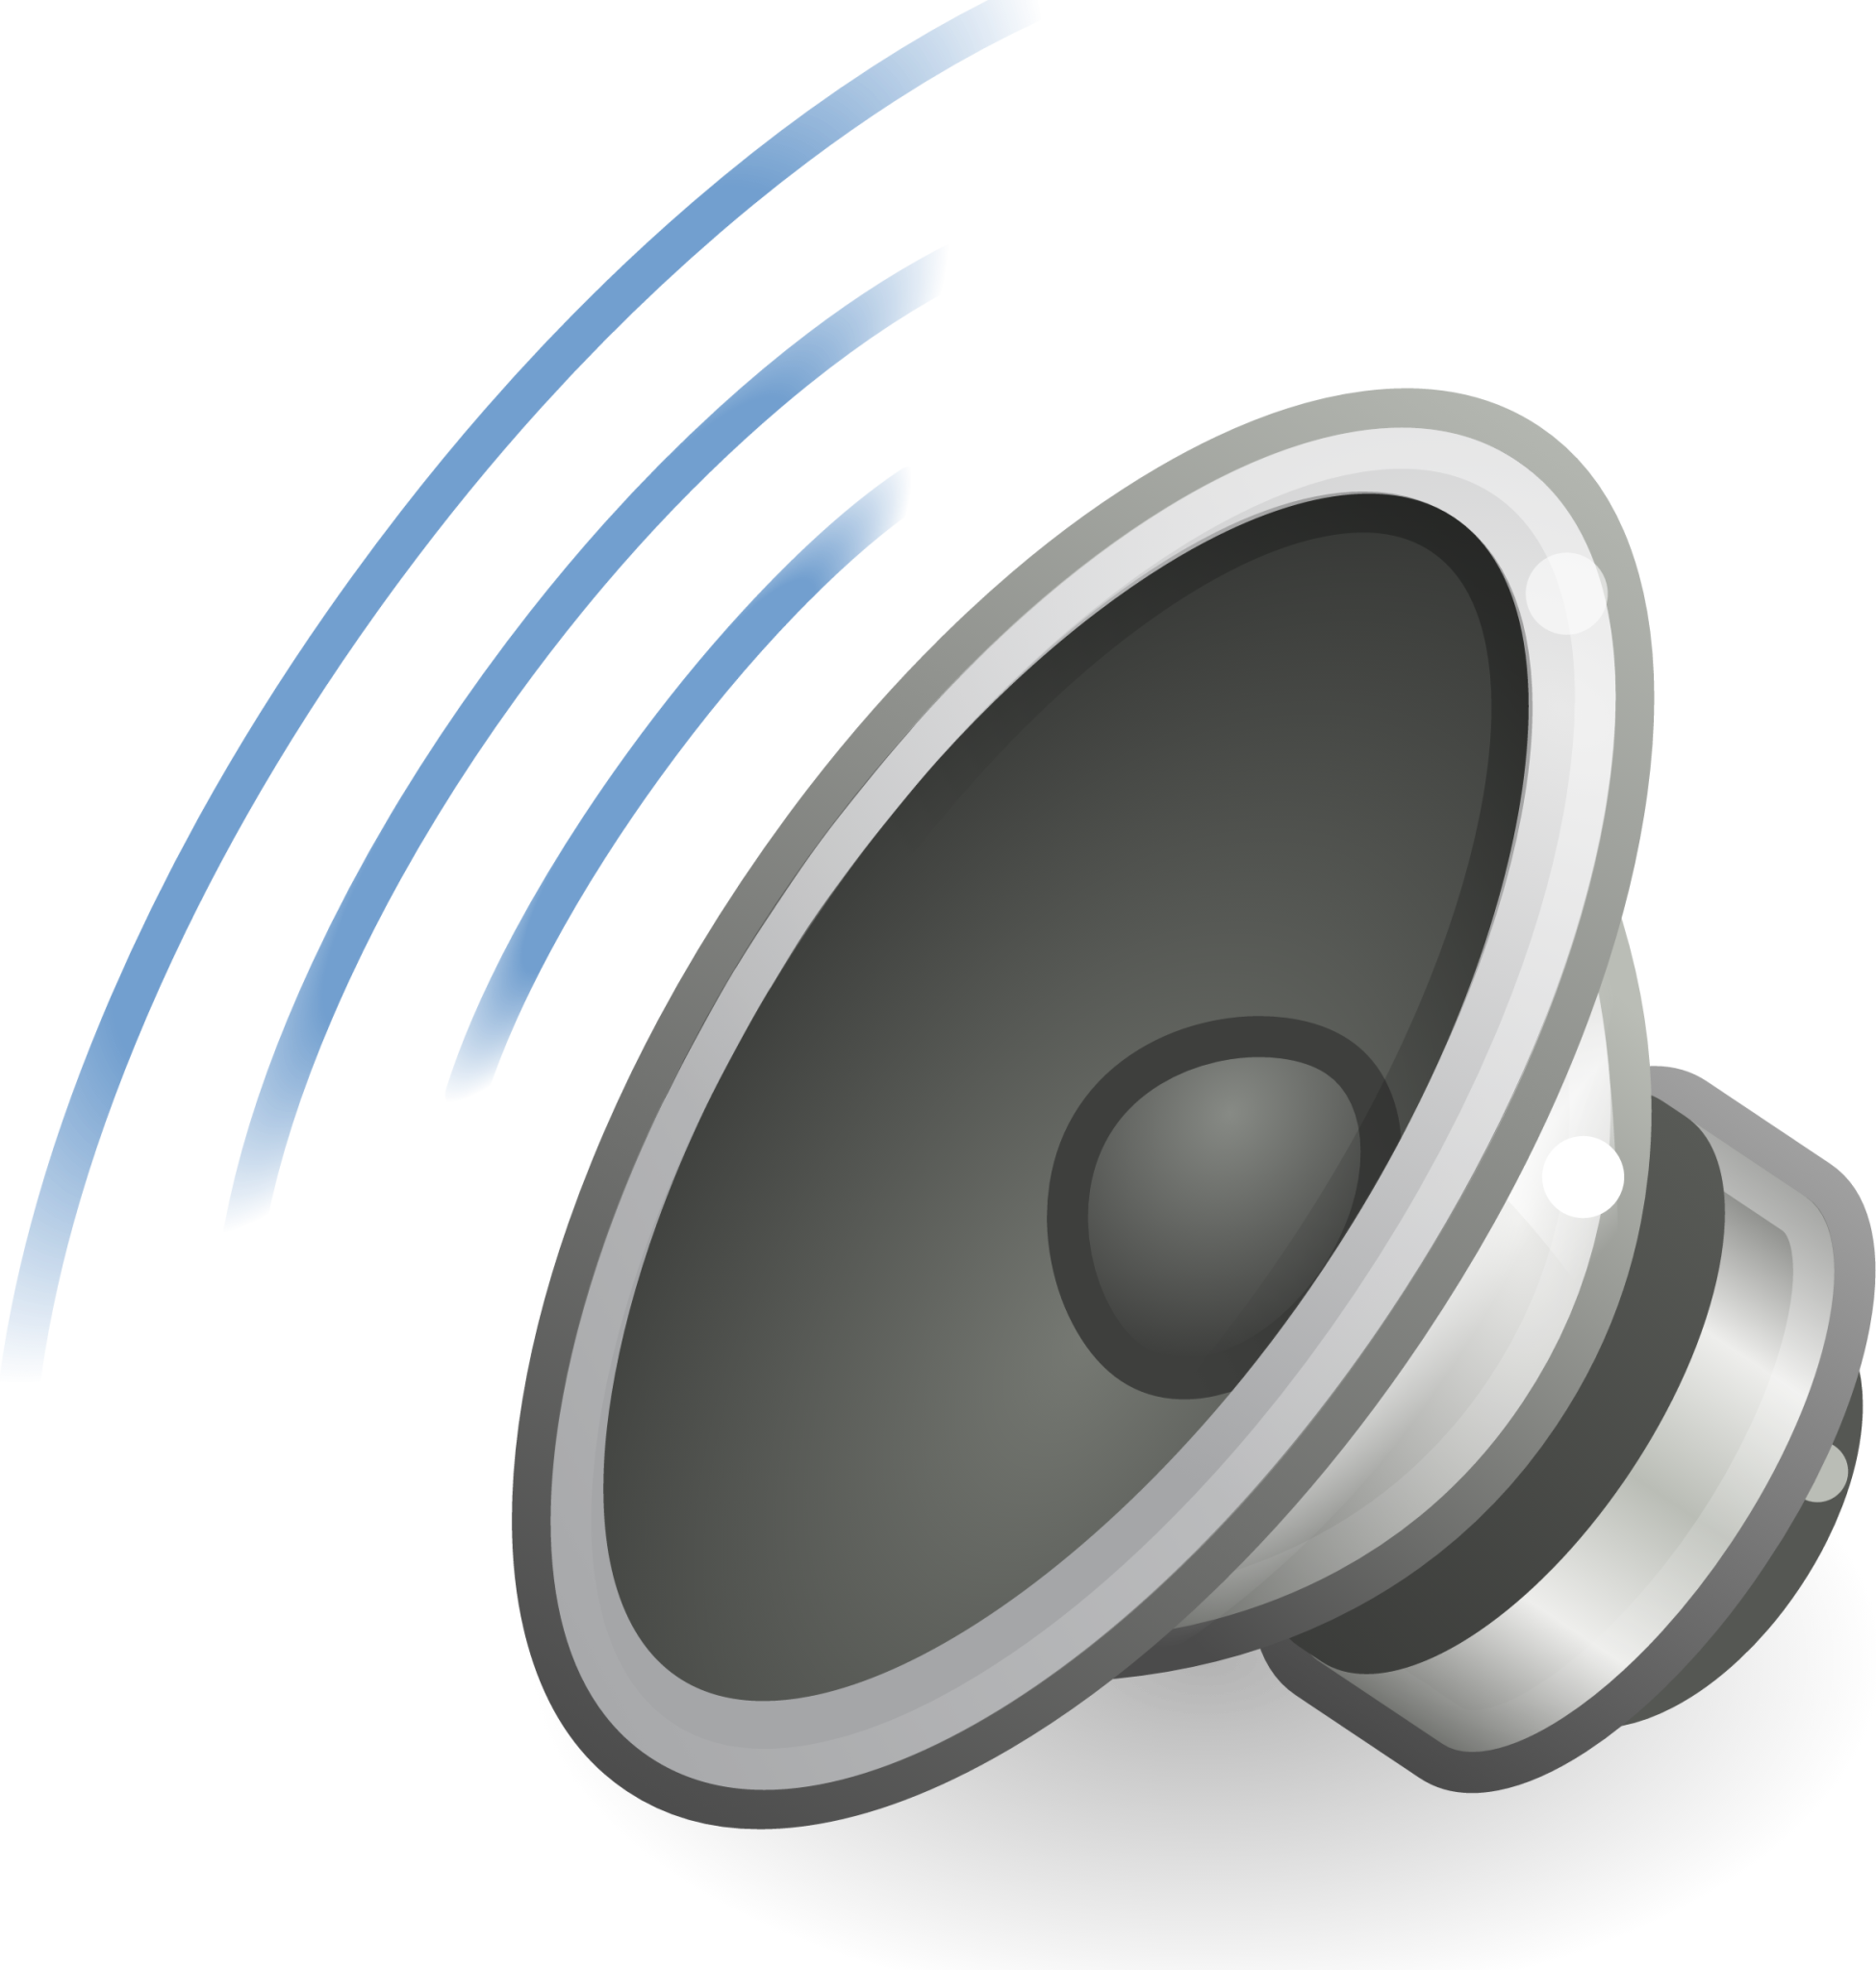 audio speaker right back testing icon